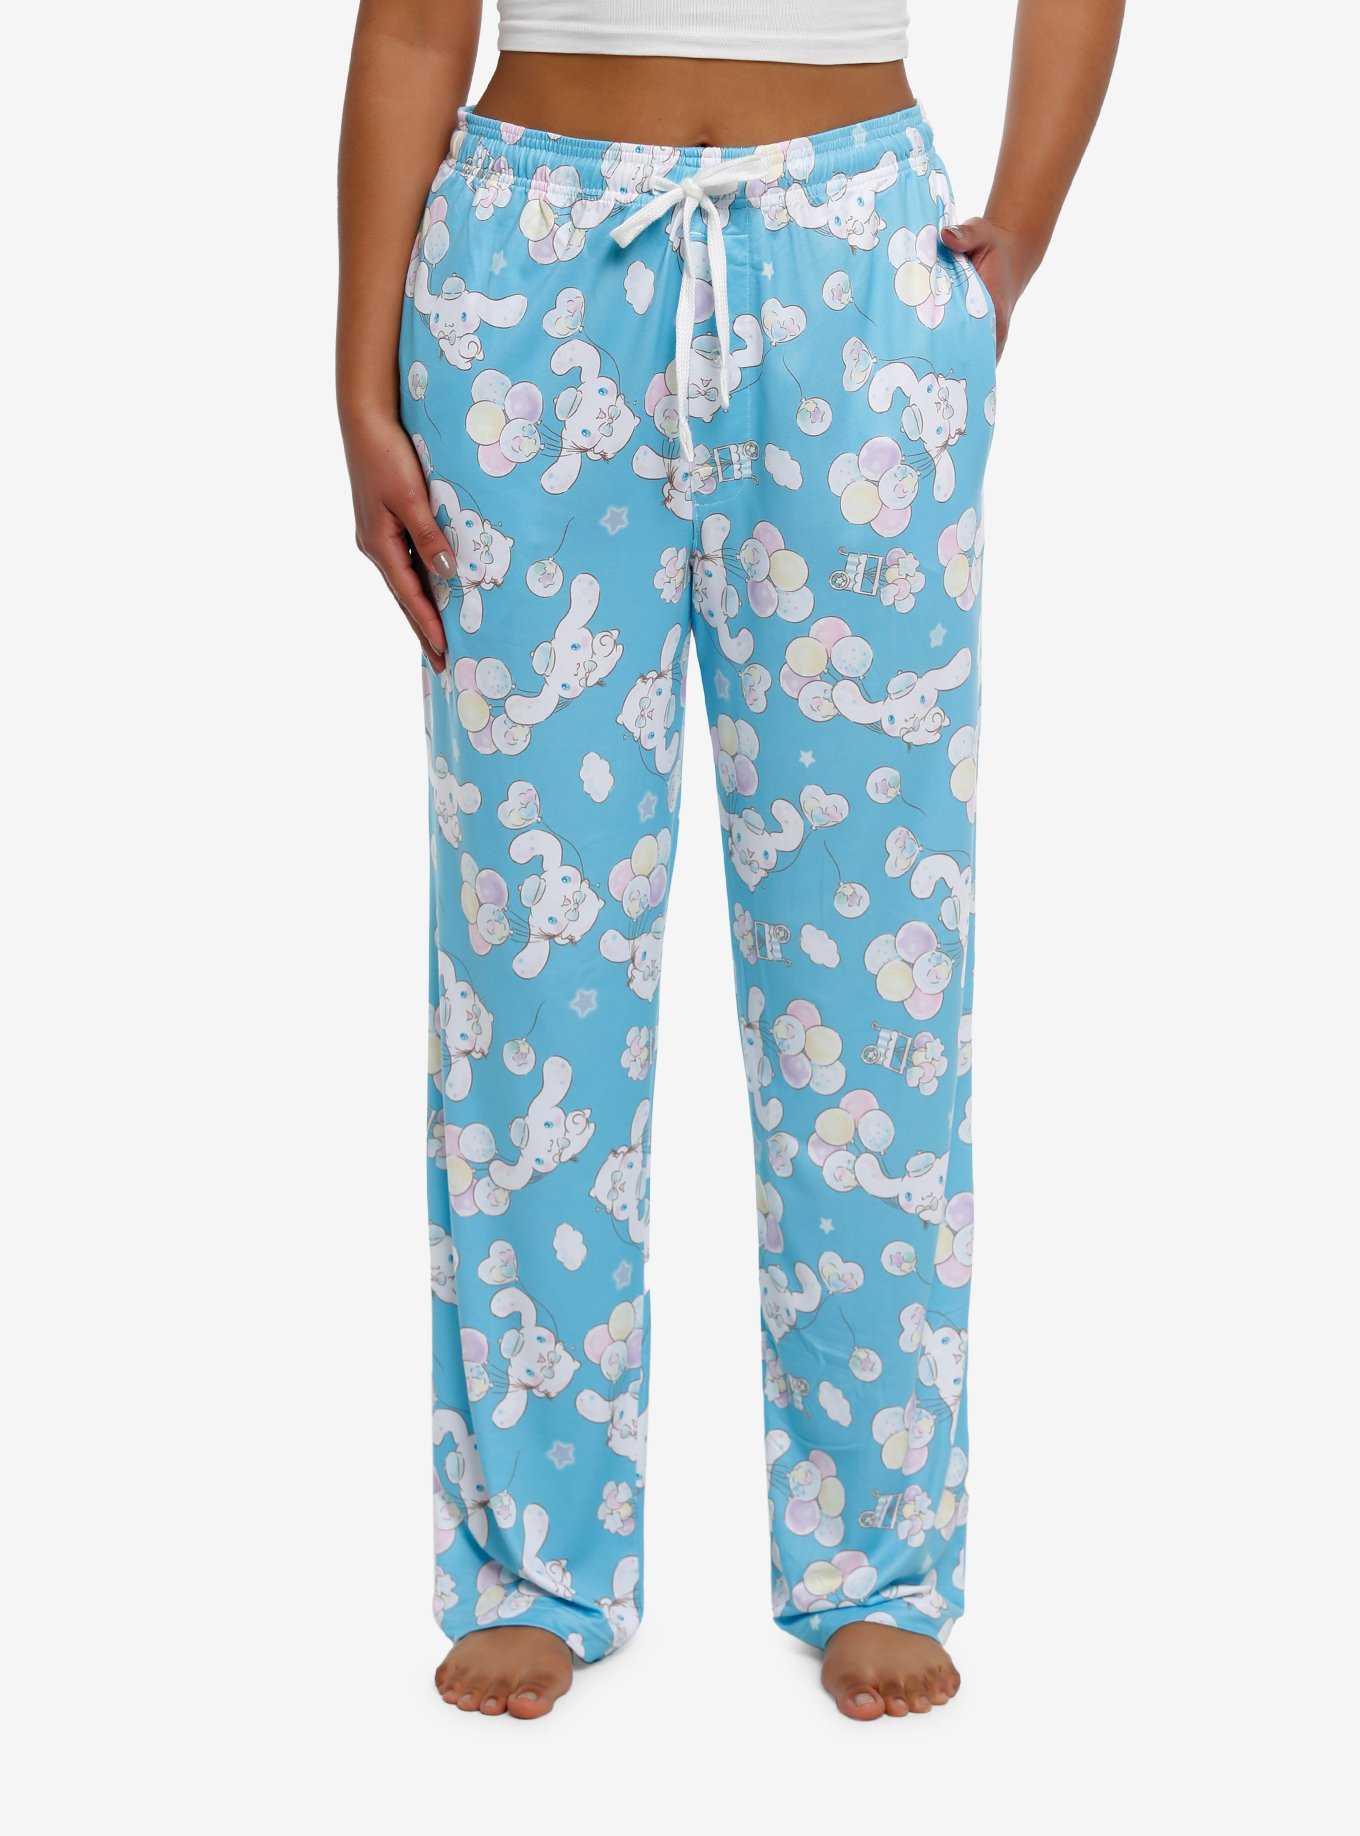 Disney Women's Soft Pajama Pants Lounge Bottoms, Mickey, Minnie